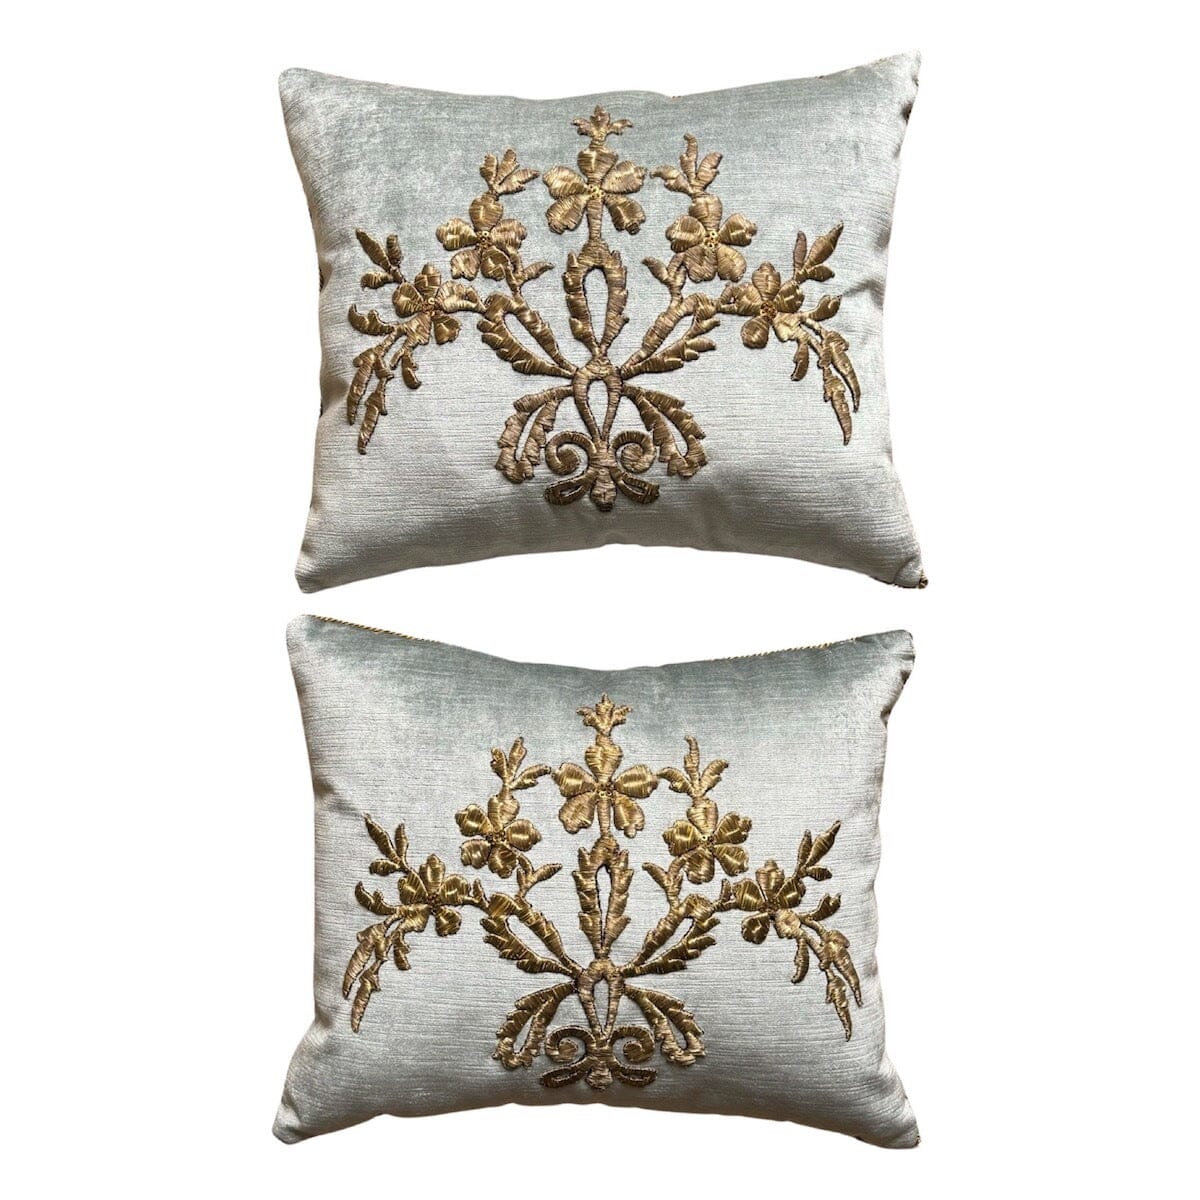 Antique Ottoman Raised Silvery Gold Metallic Embroidery (#E120423A&B | 15x 18") New Pillows B. Viz Design 